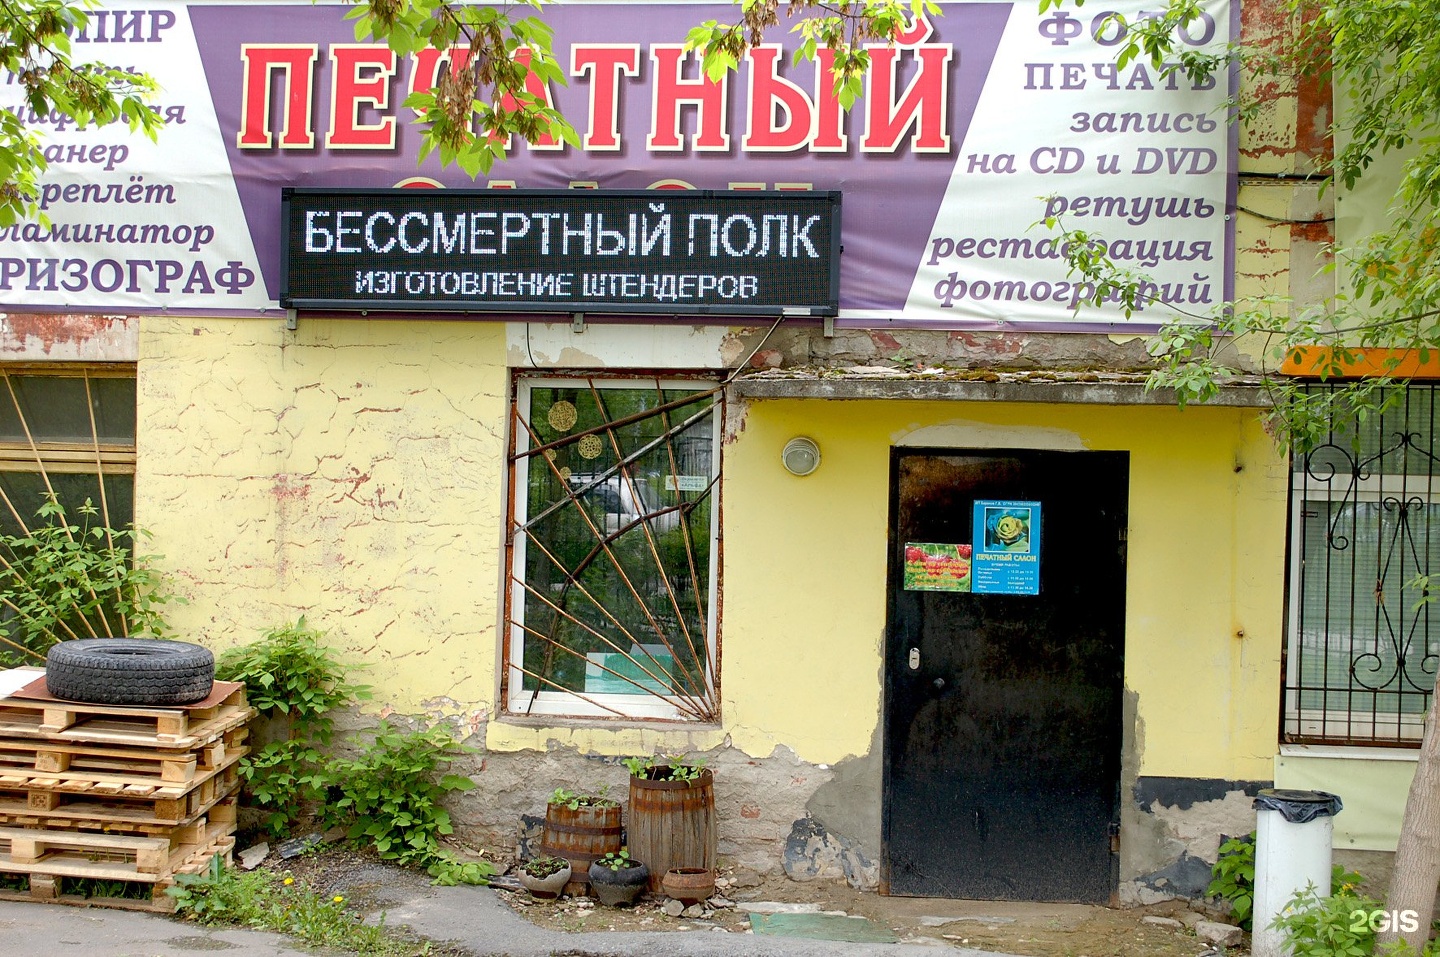 Салоны печати Пермь